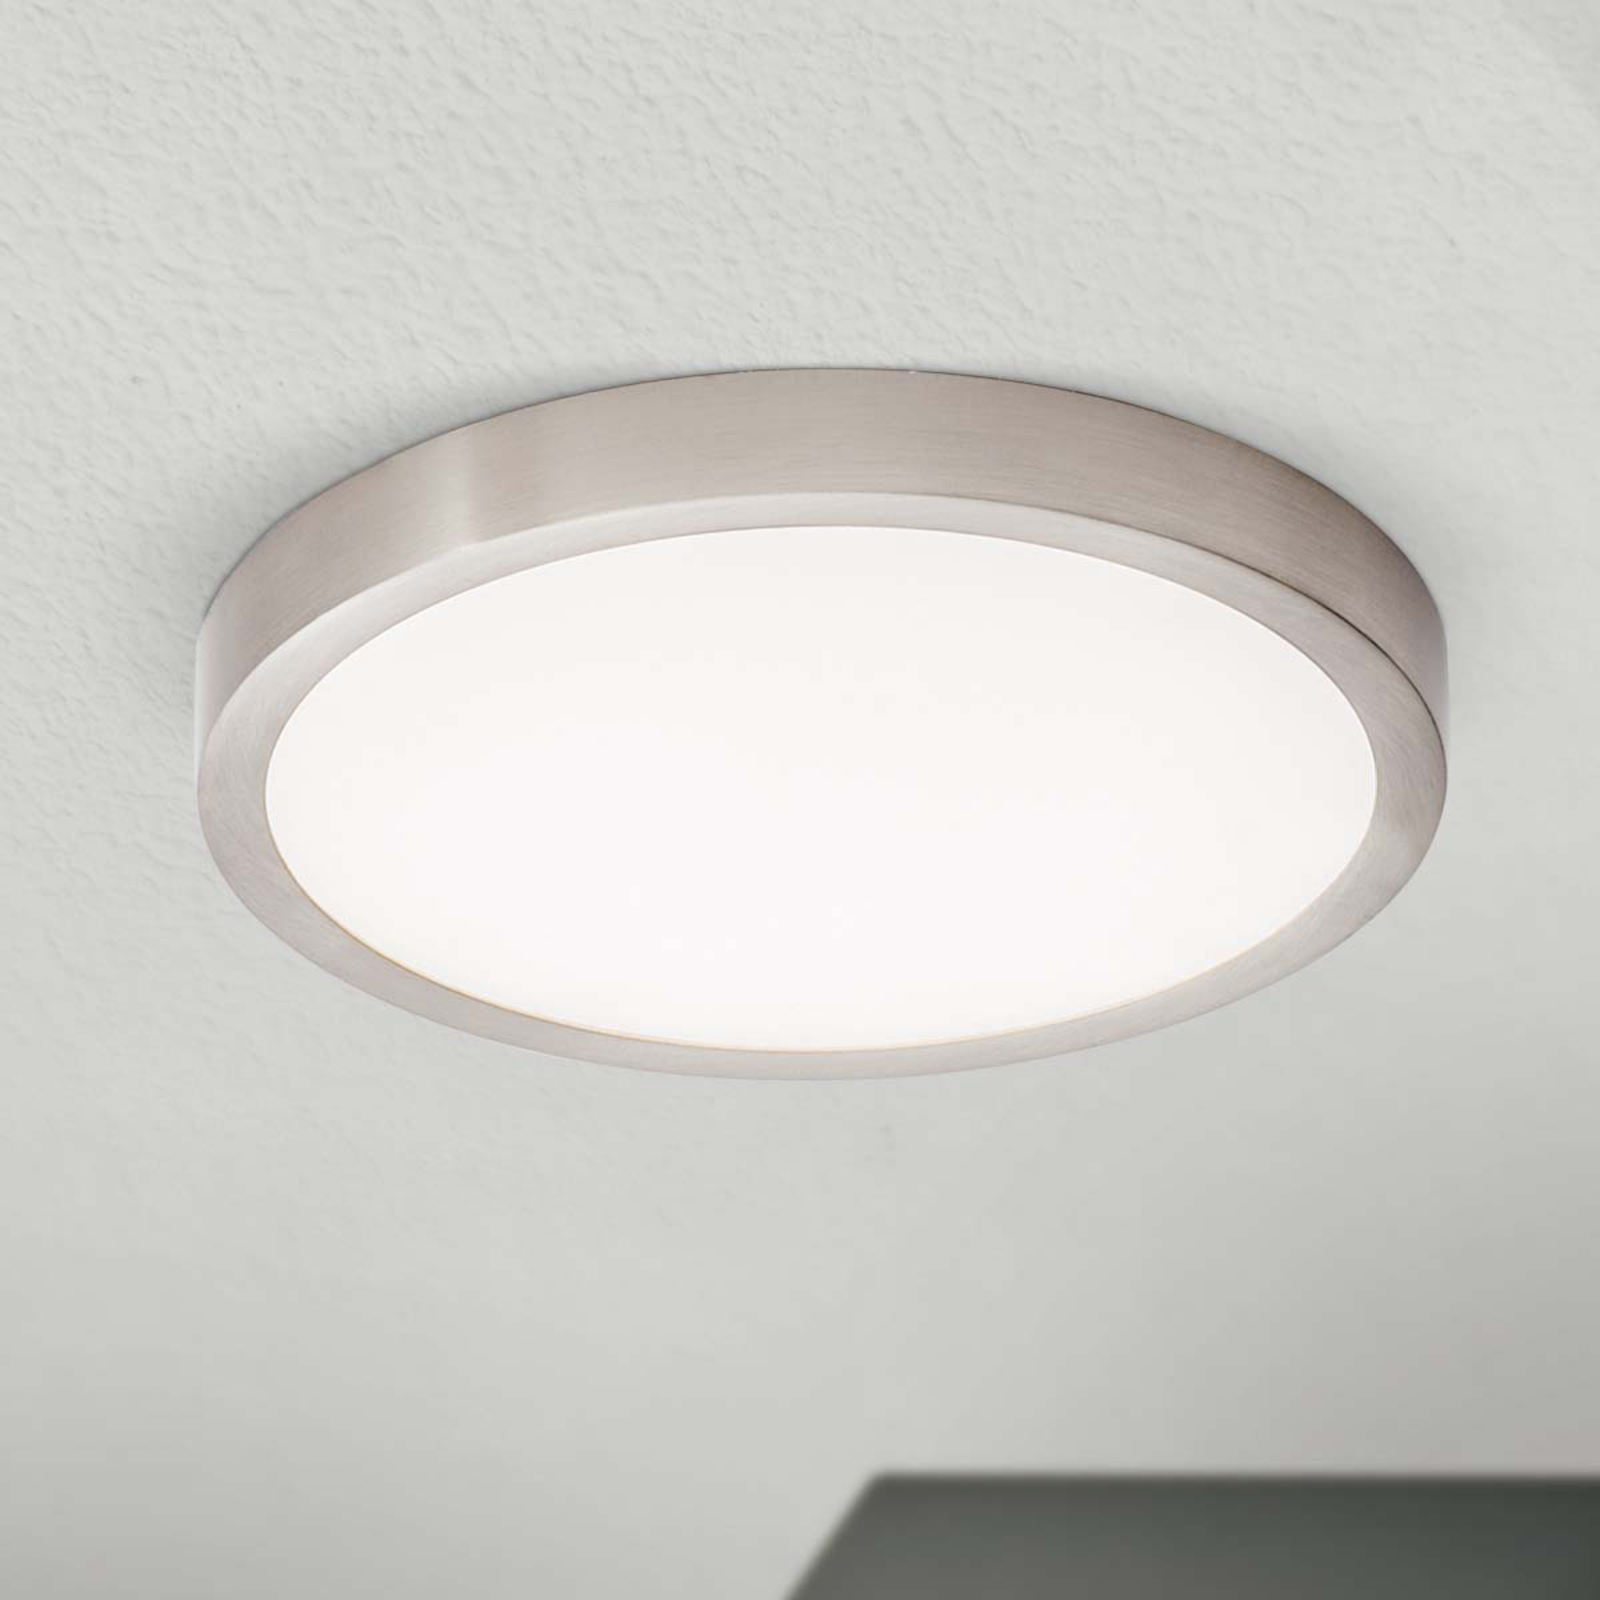 Heel platte LED plafondlamp Vika, 23 cm